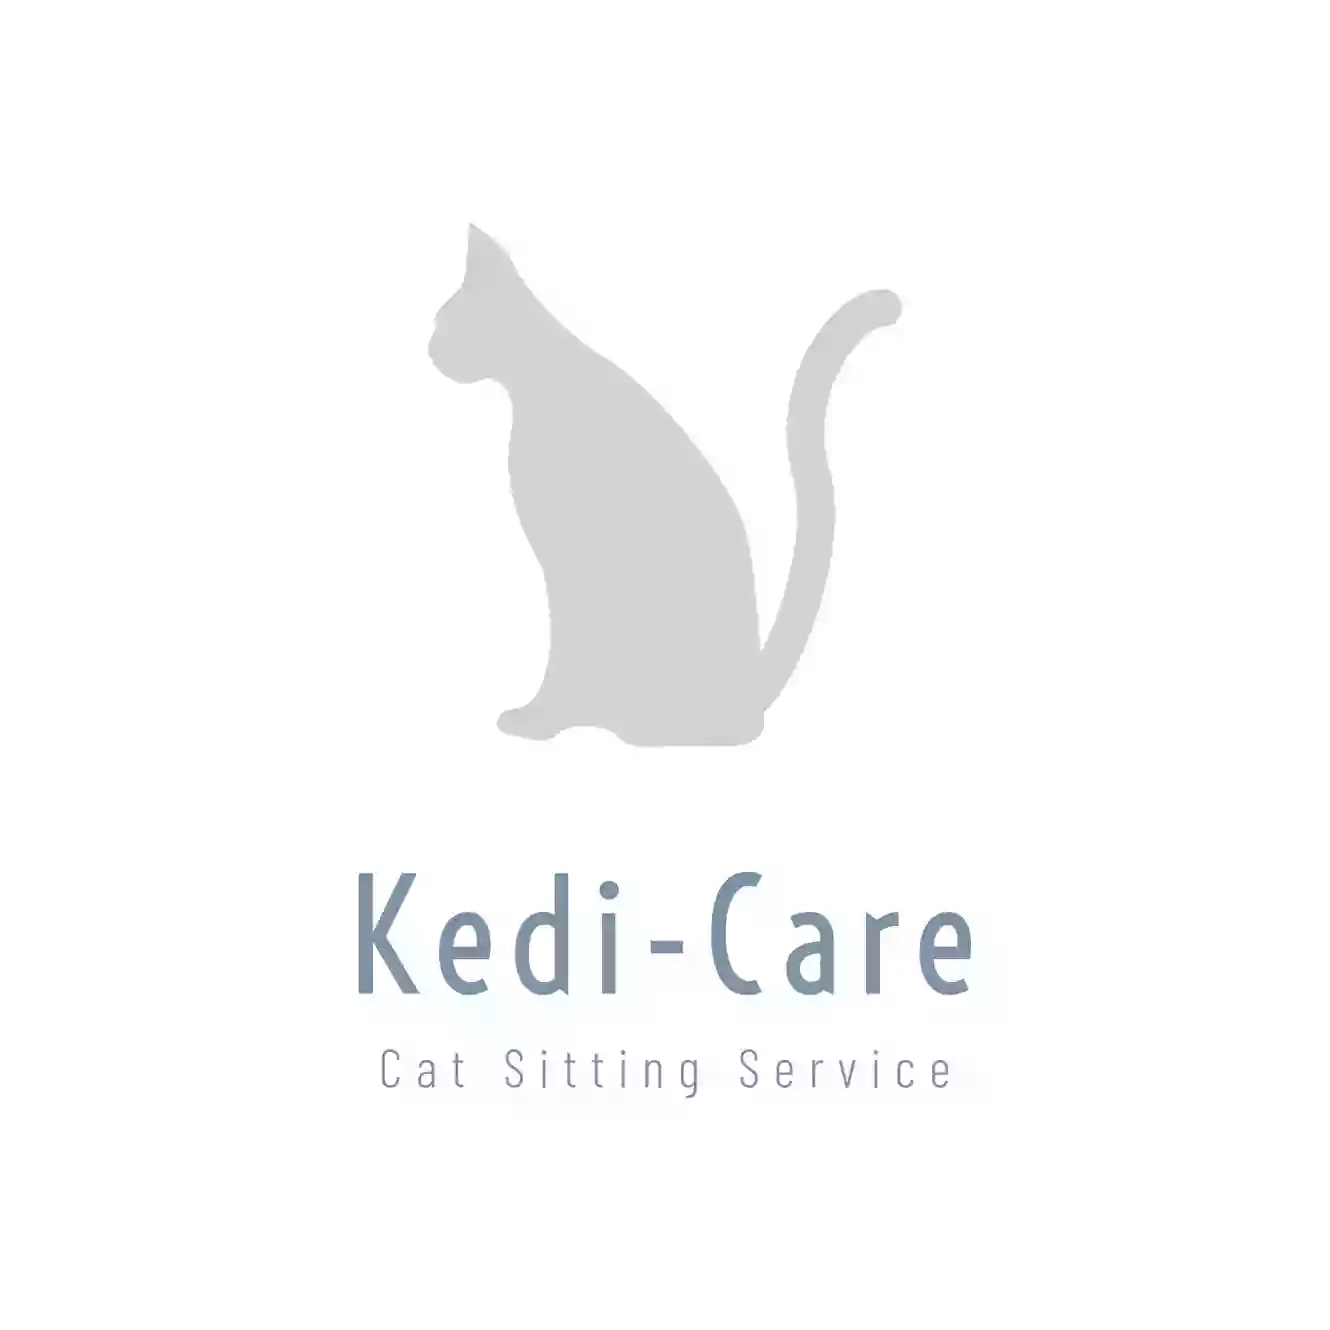 Kedi-Care Cat & Pet sitting services